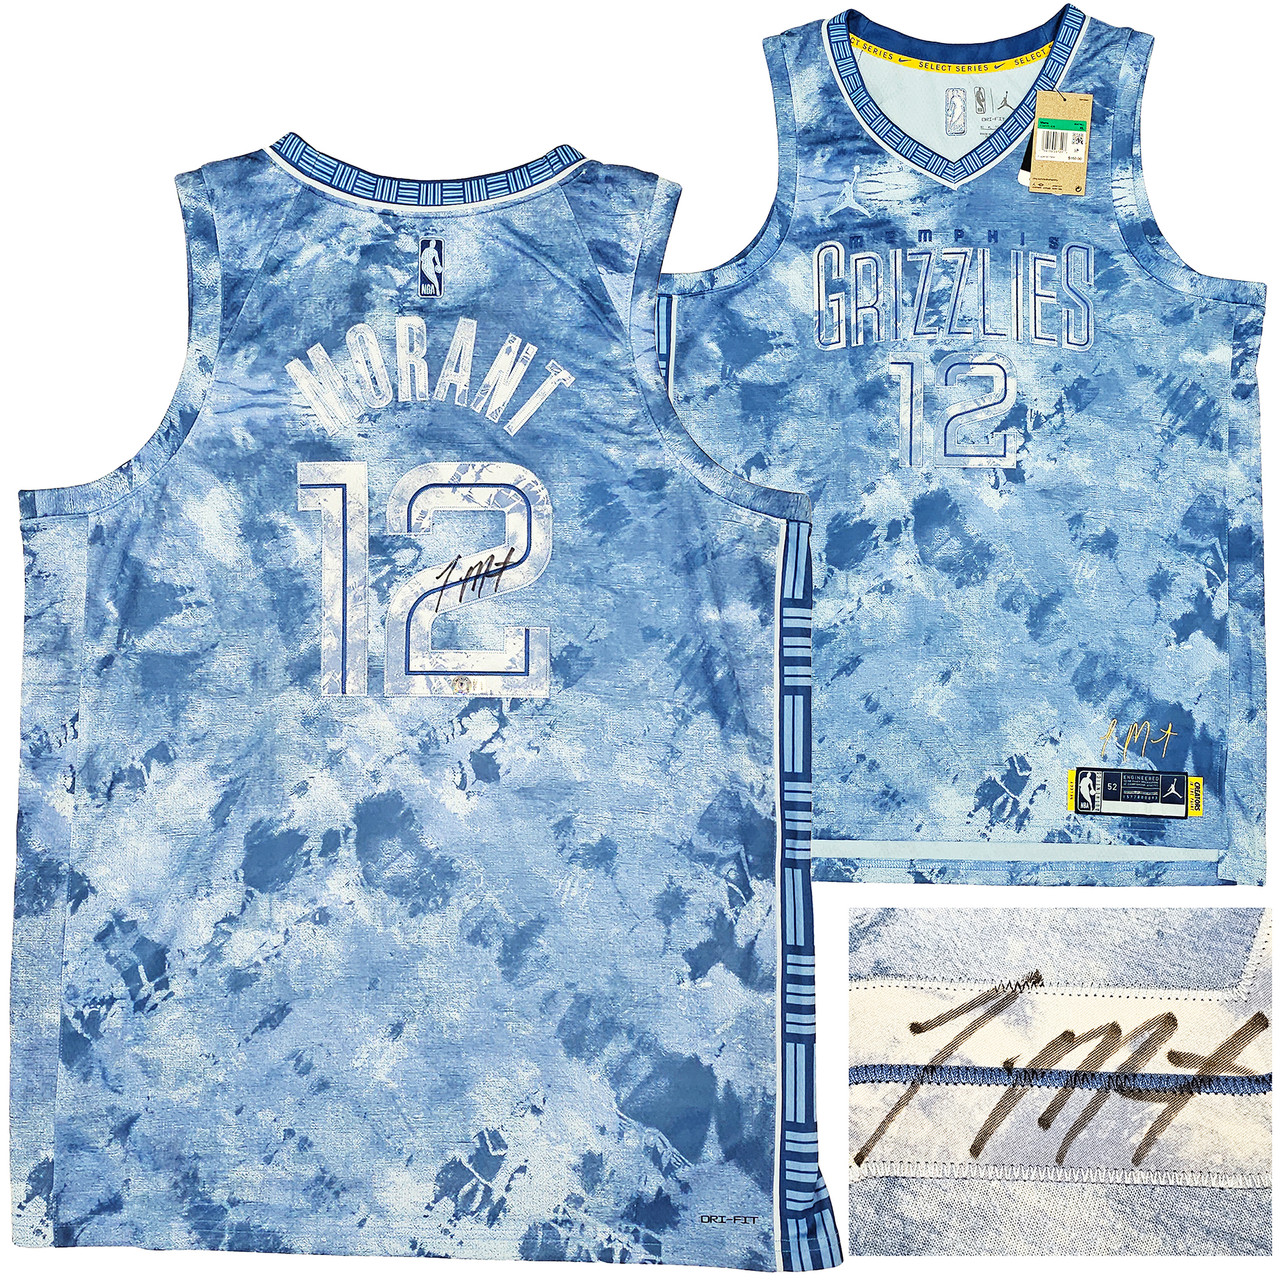 Memphis Grizzlies Ja Morant Autographed Blue Retro Brand Jersey Size XL  Beckett BAS QR Stock #210857